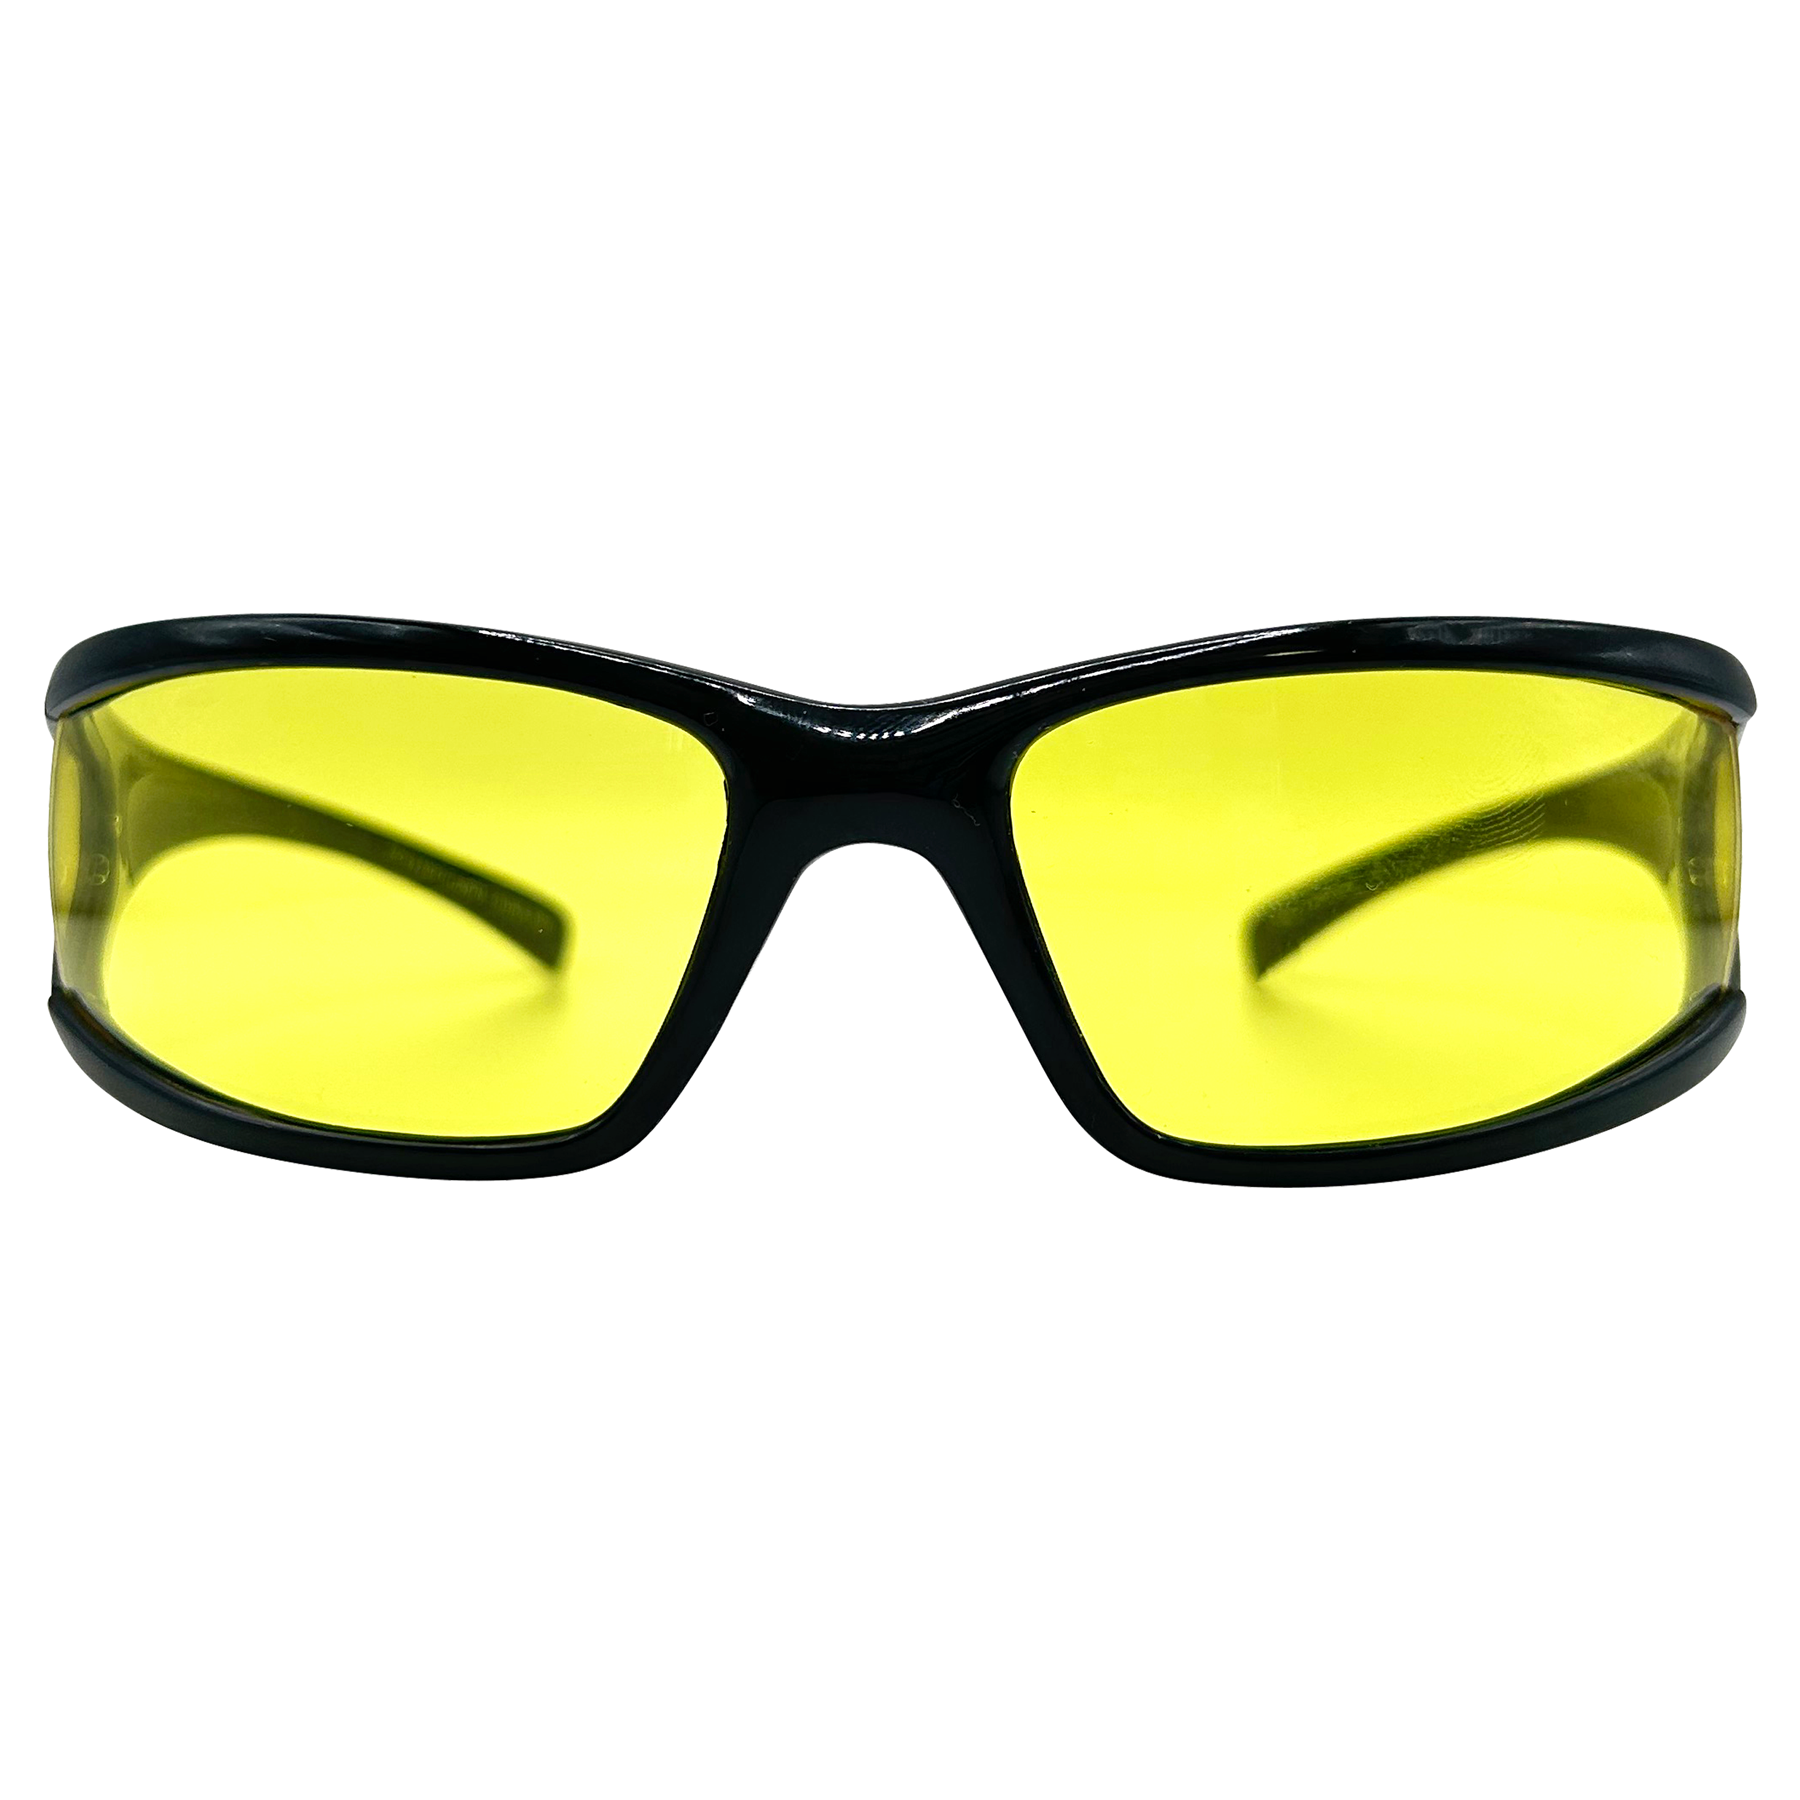 VITAMIN D Wraparound Sports Sunglasses | Blue-Blocker | Day Driving